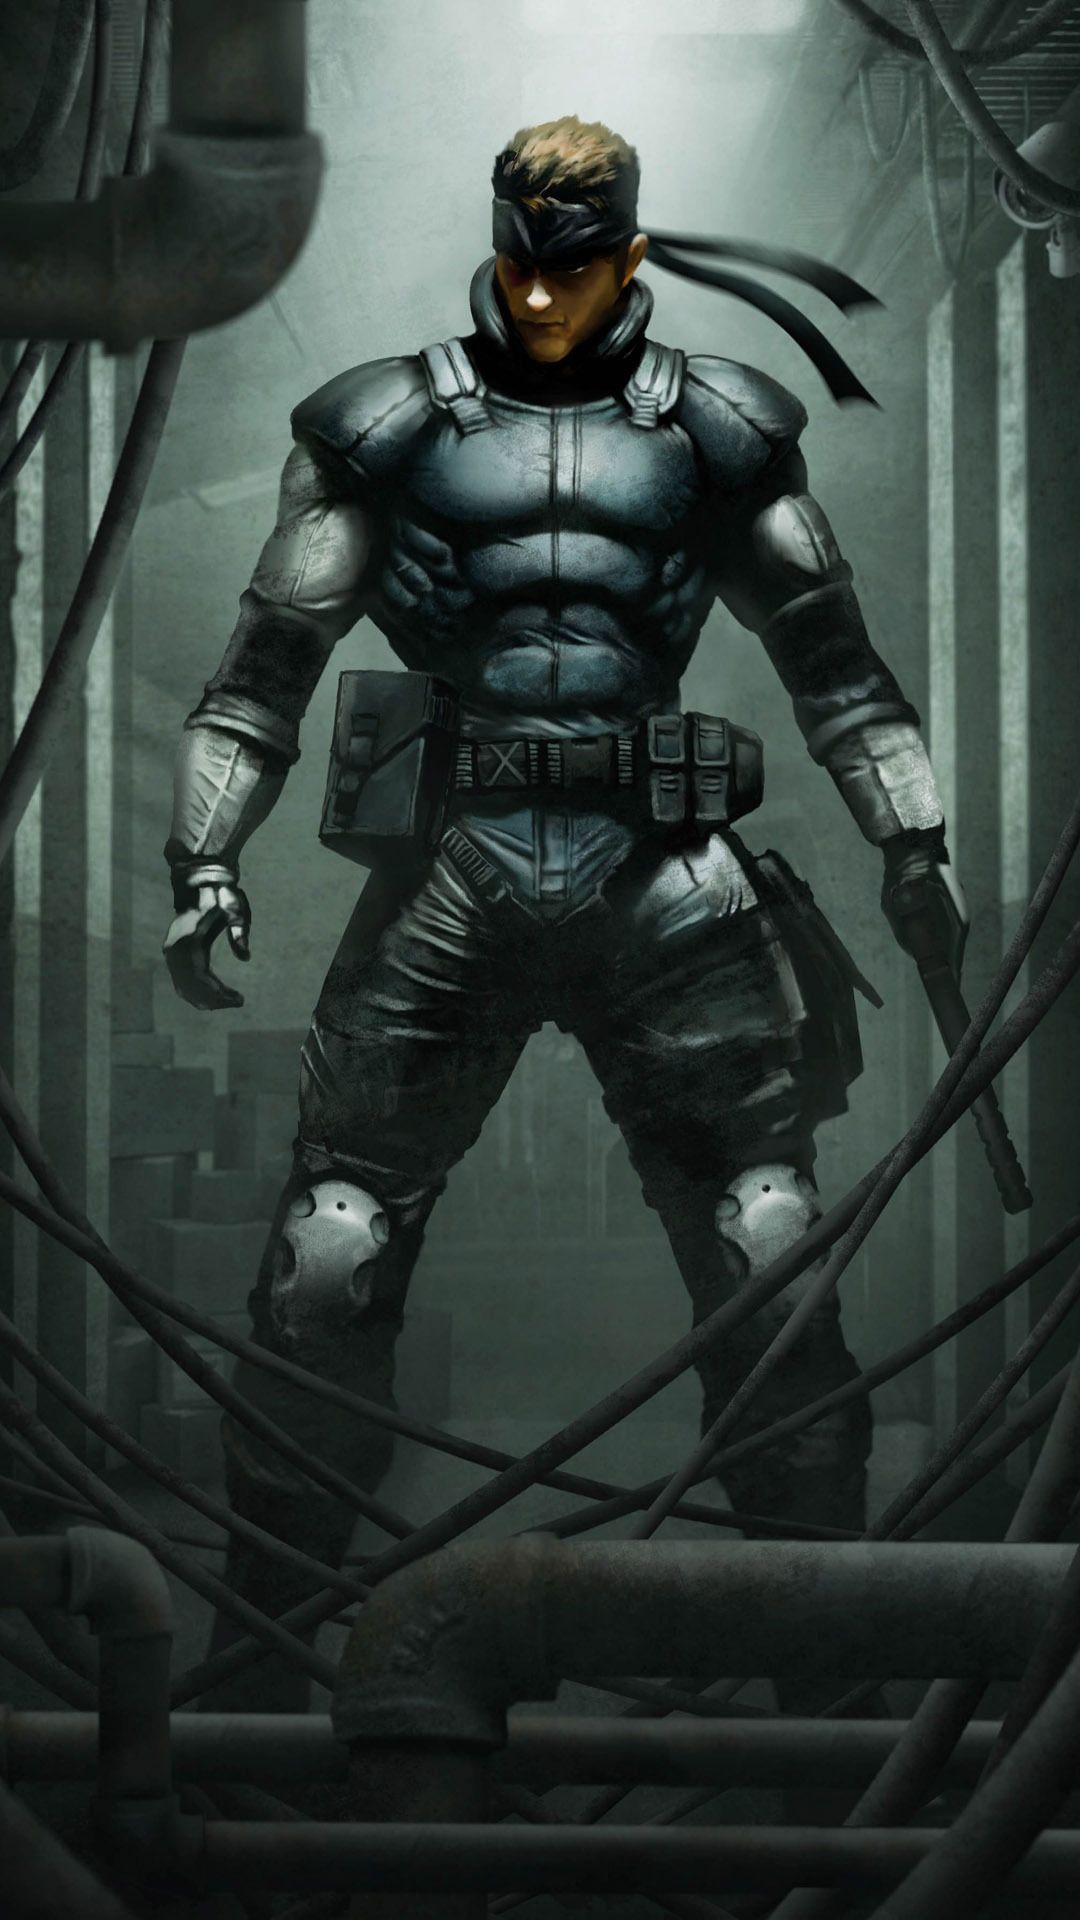 metal gear iphone wallpaper,action adventure game,fictional character,superhero,supervillain,action figure